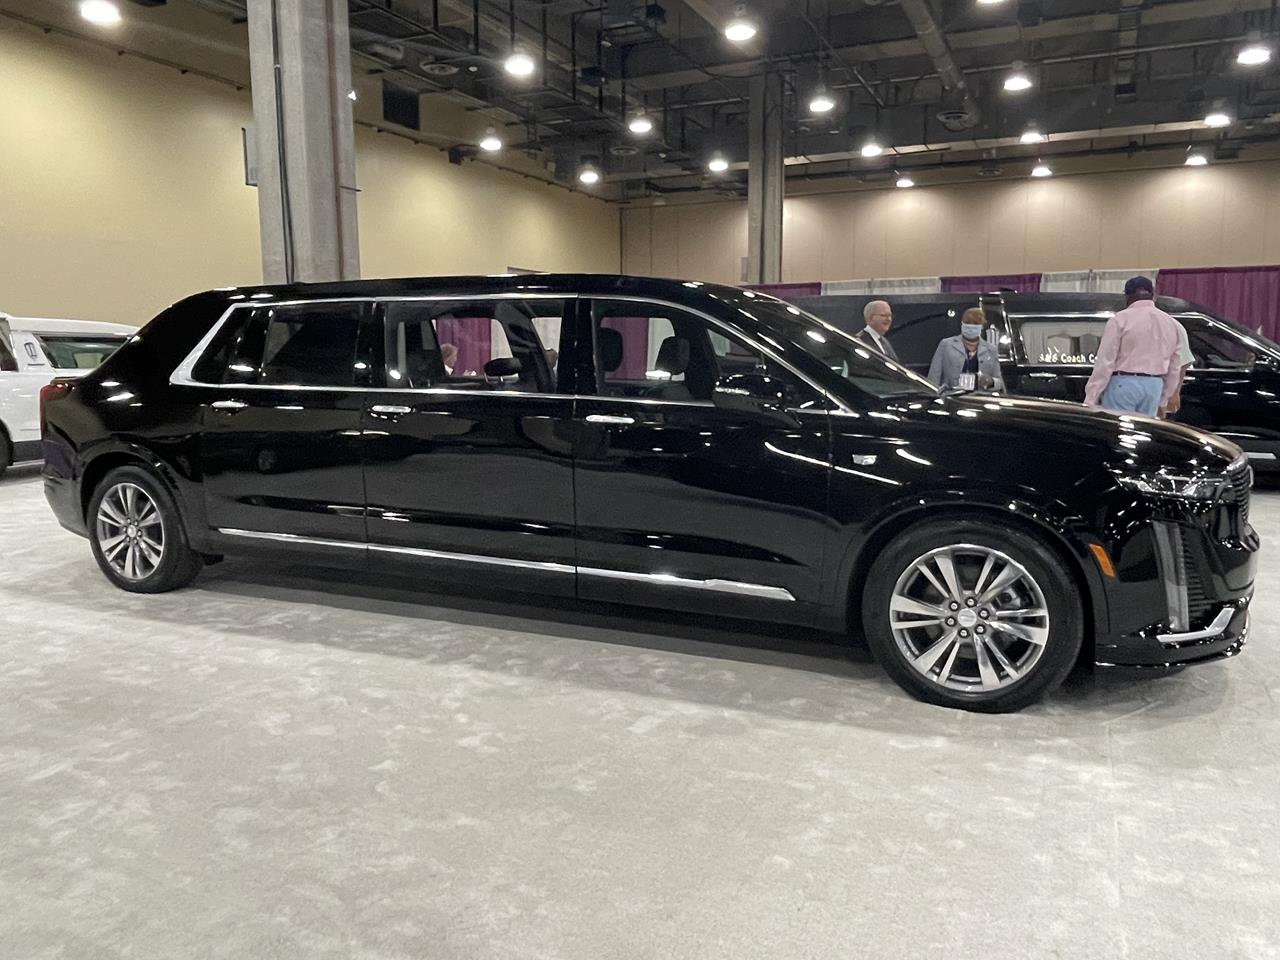 2021 Cadillac SS XT6 Presidential Limousine 819 2